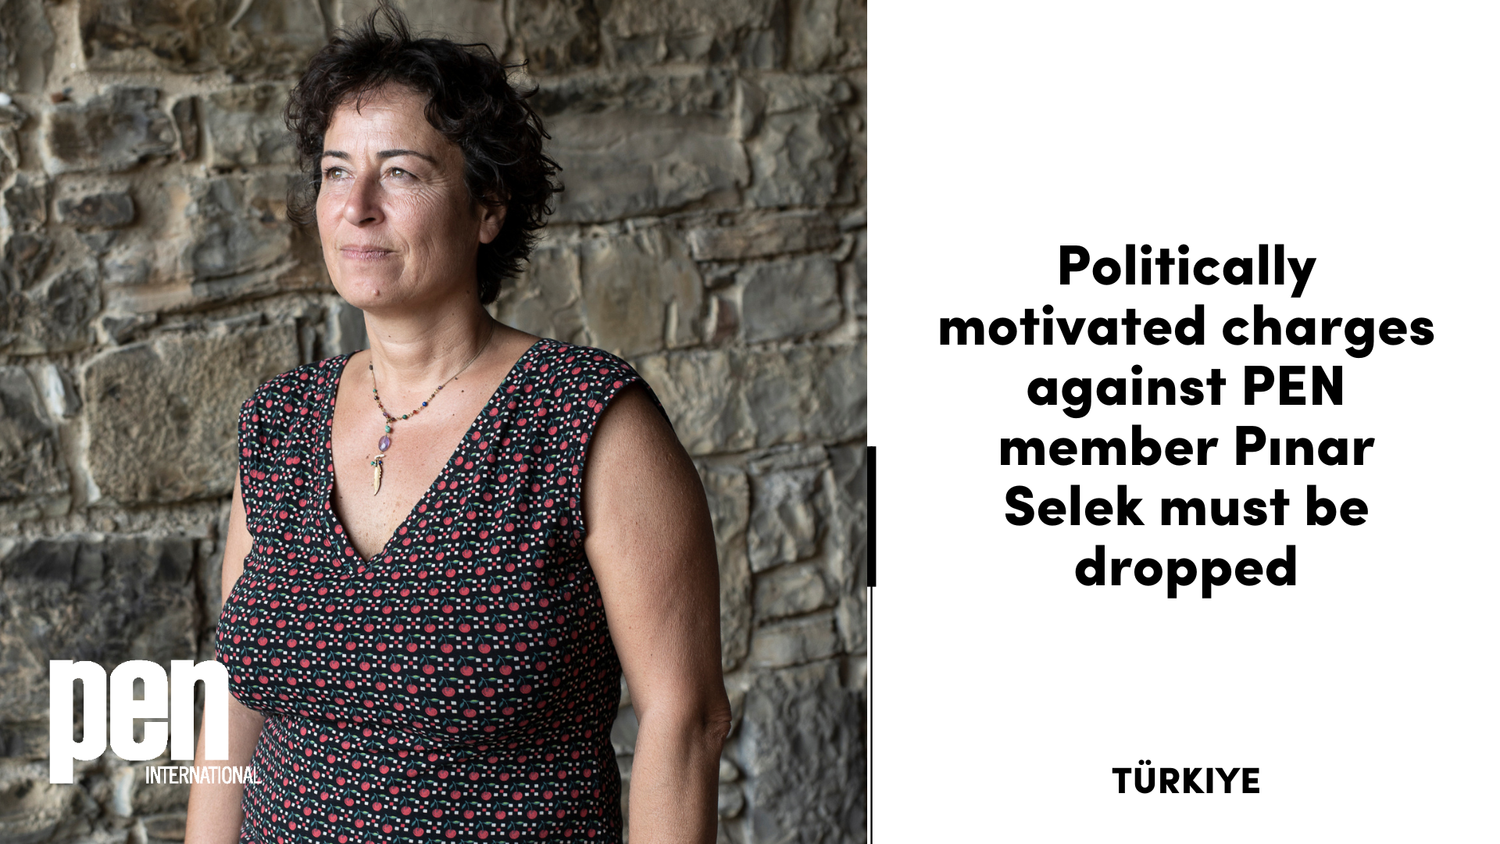 Türkiye: Politically motivated charges against PEN member Pınar Selek must be dropped